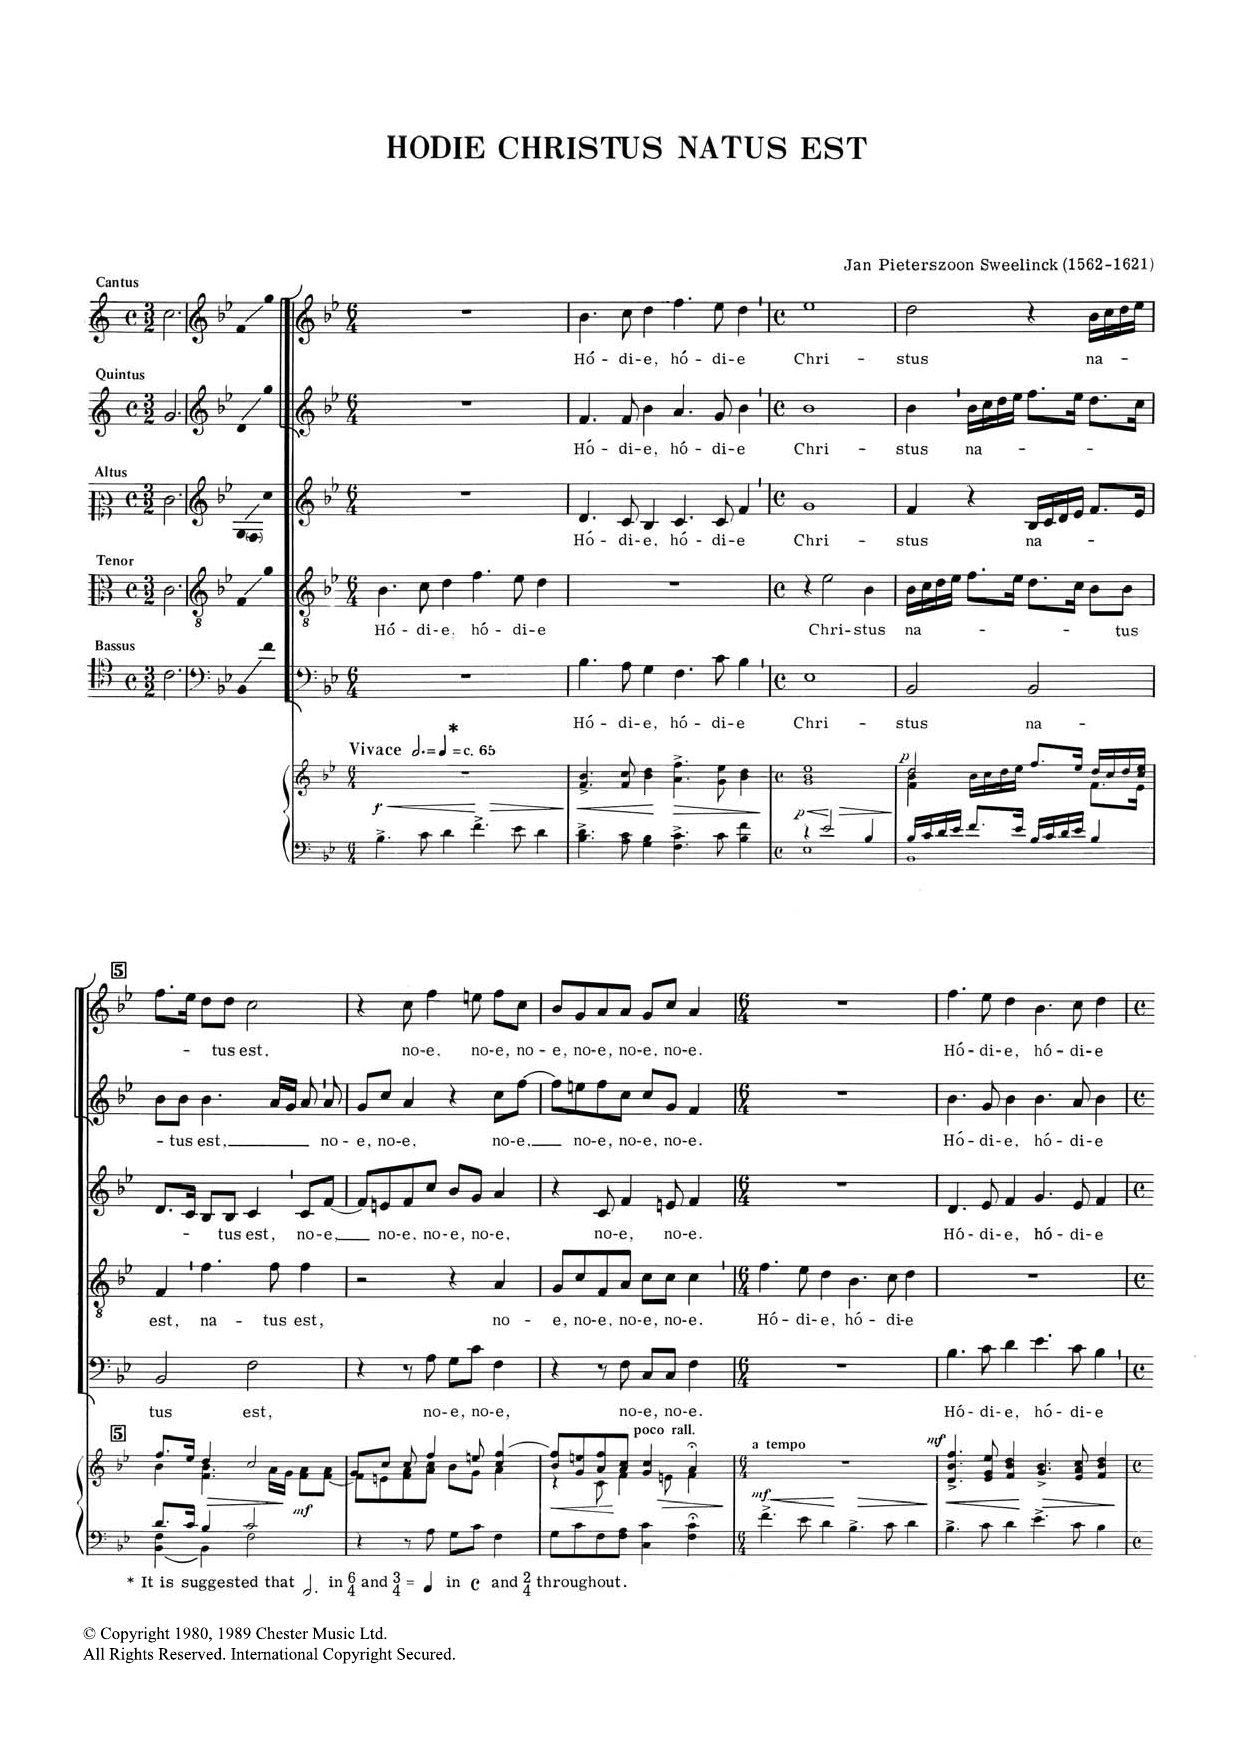 Jan Pieterszoon Sweelinck Hodie Chrustus Natus Est Sheet Music Notes & Chords for Choral SAATB - Download or Print PDF